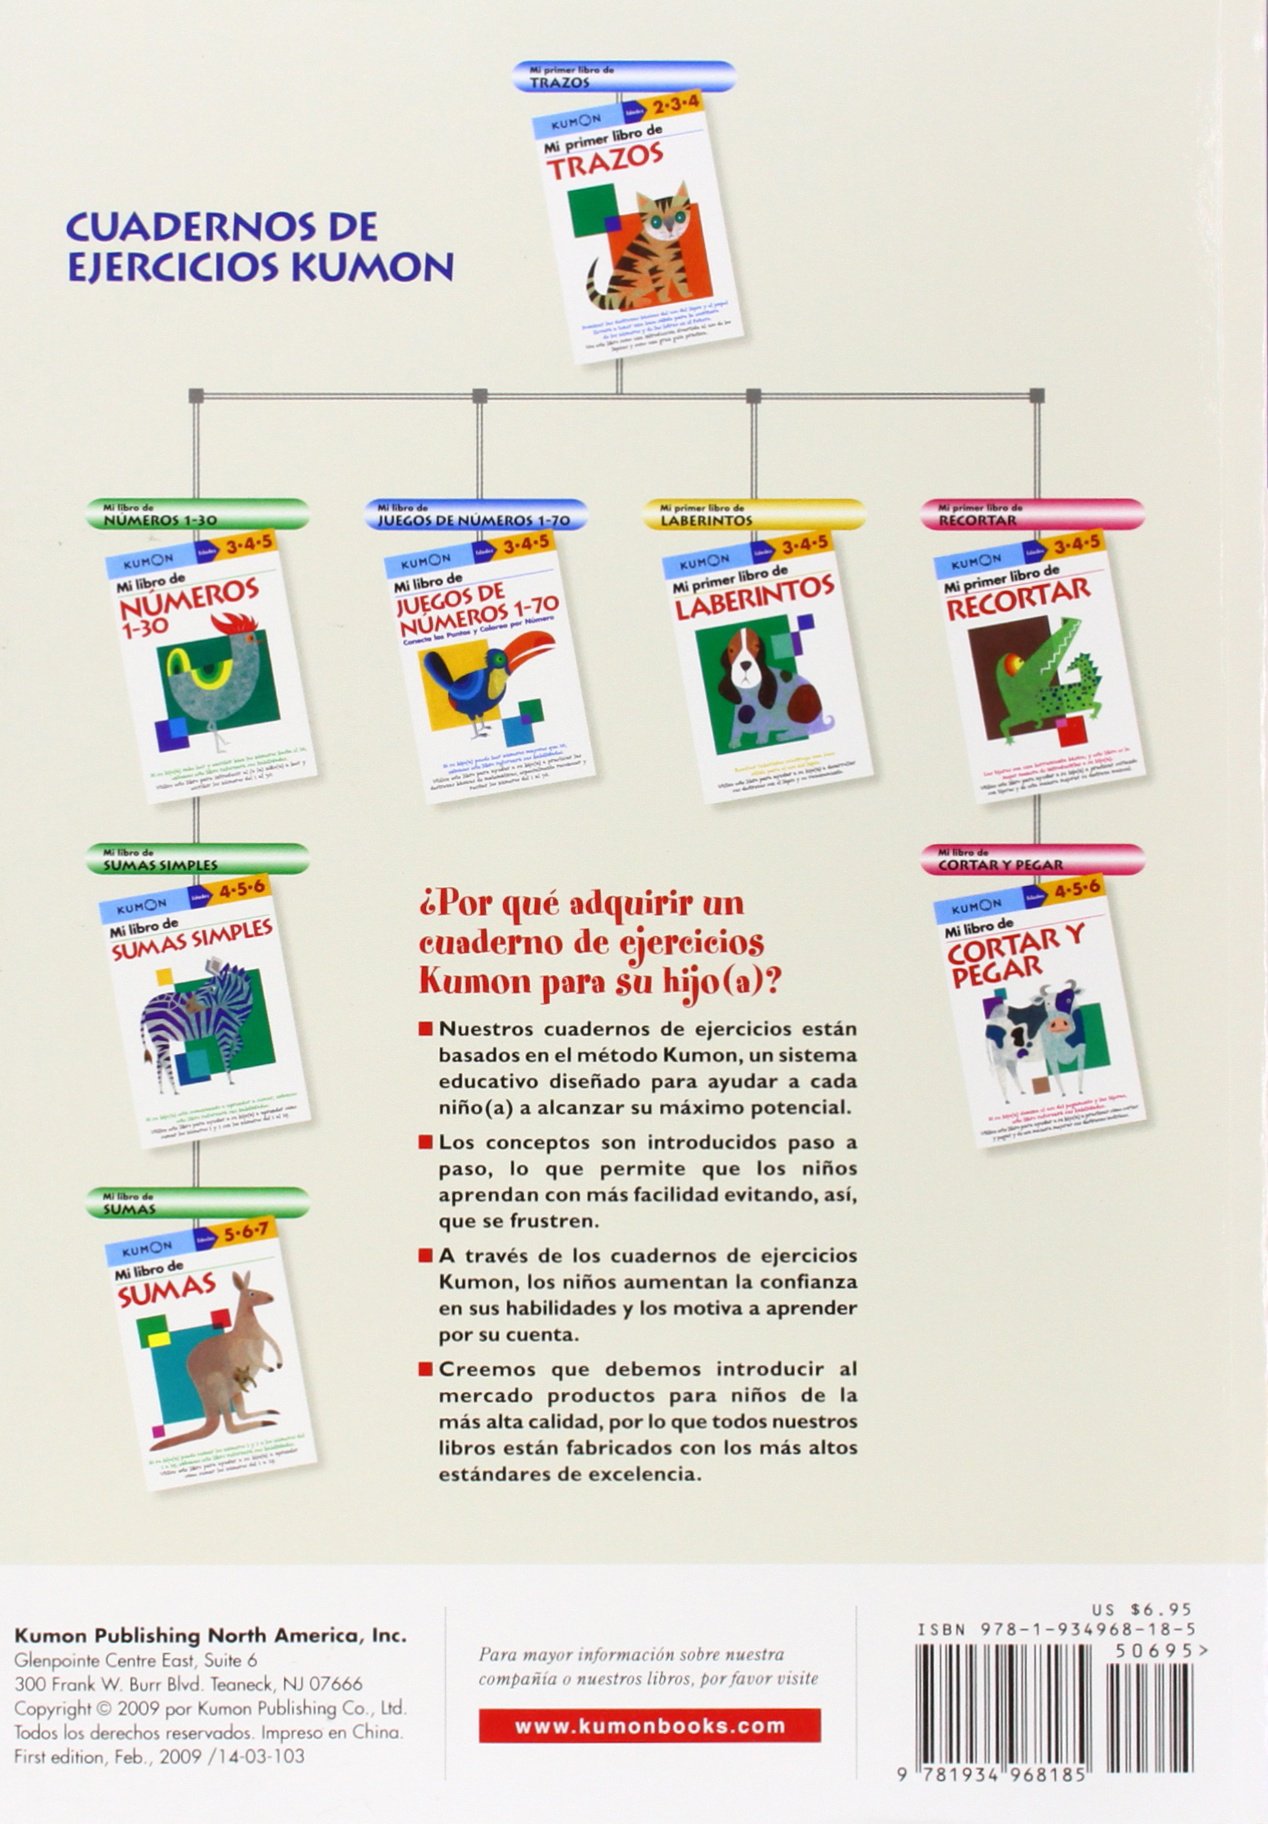 Mi Primer Libro de Trazos (Kumon Workbooks: Basic Skills) (Spanish Edition)